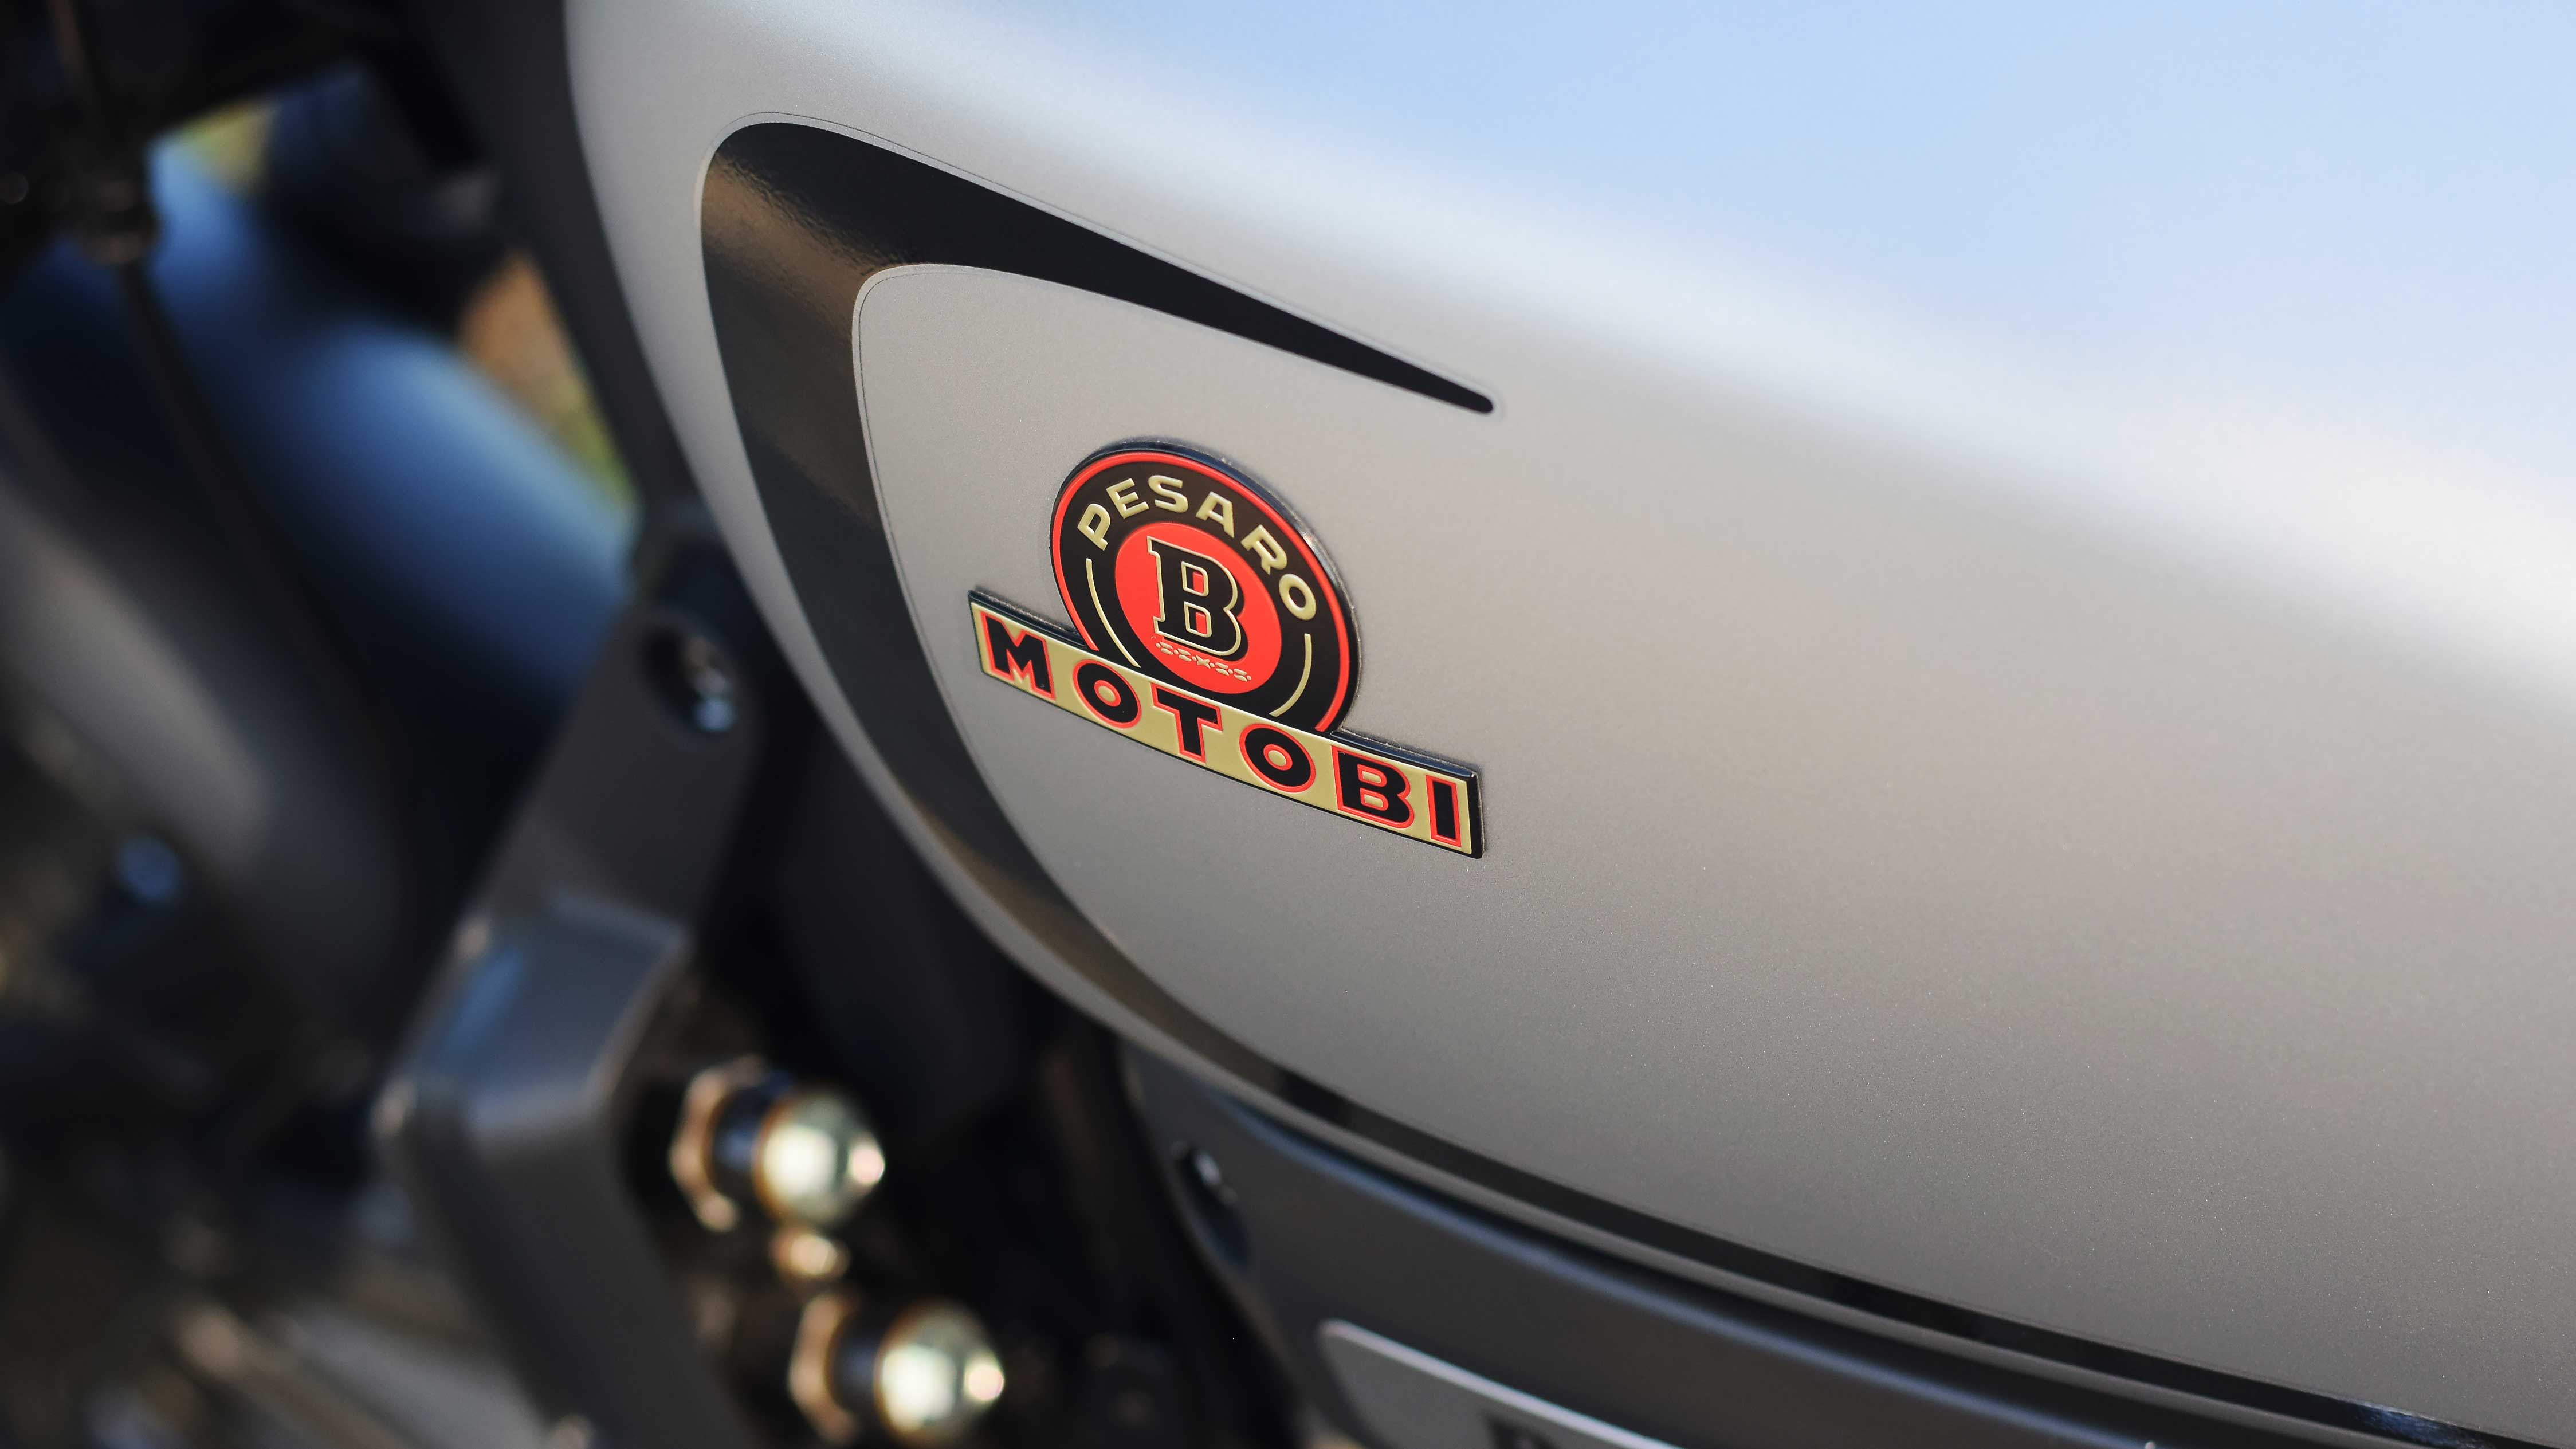 The Benelli Motobi 200 Evo emblem